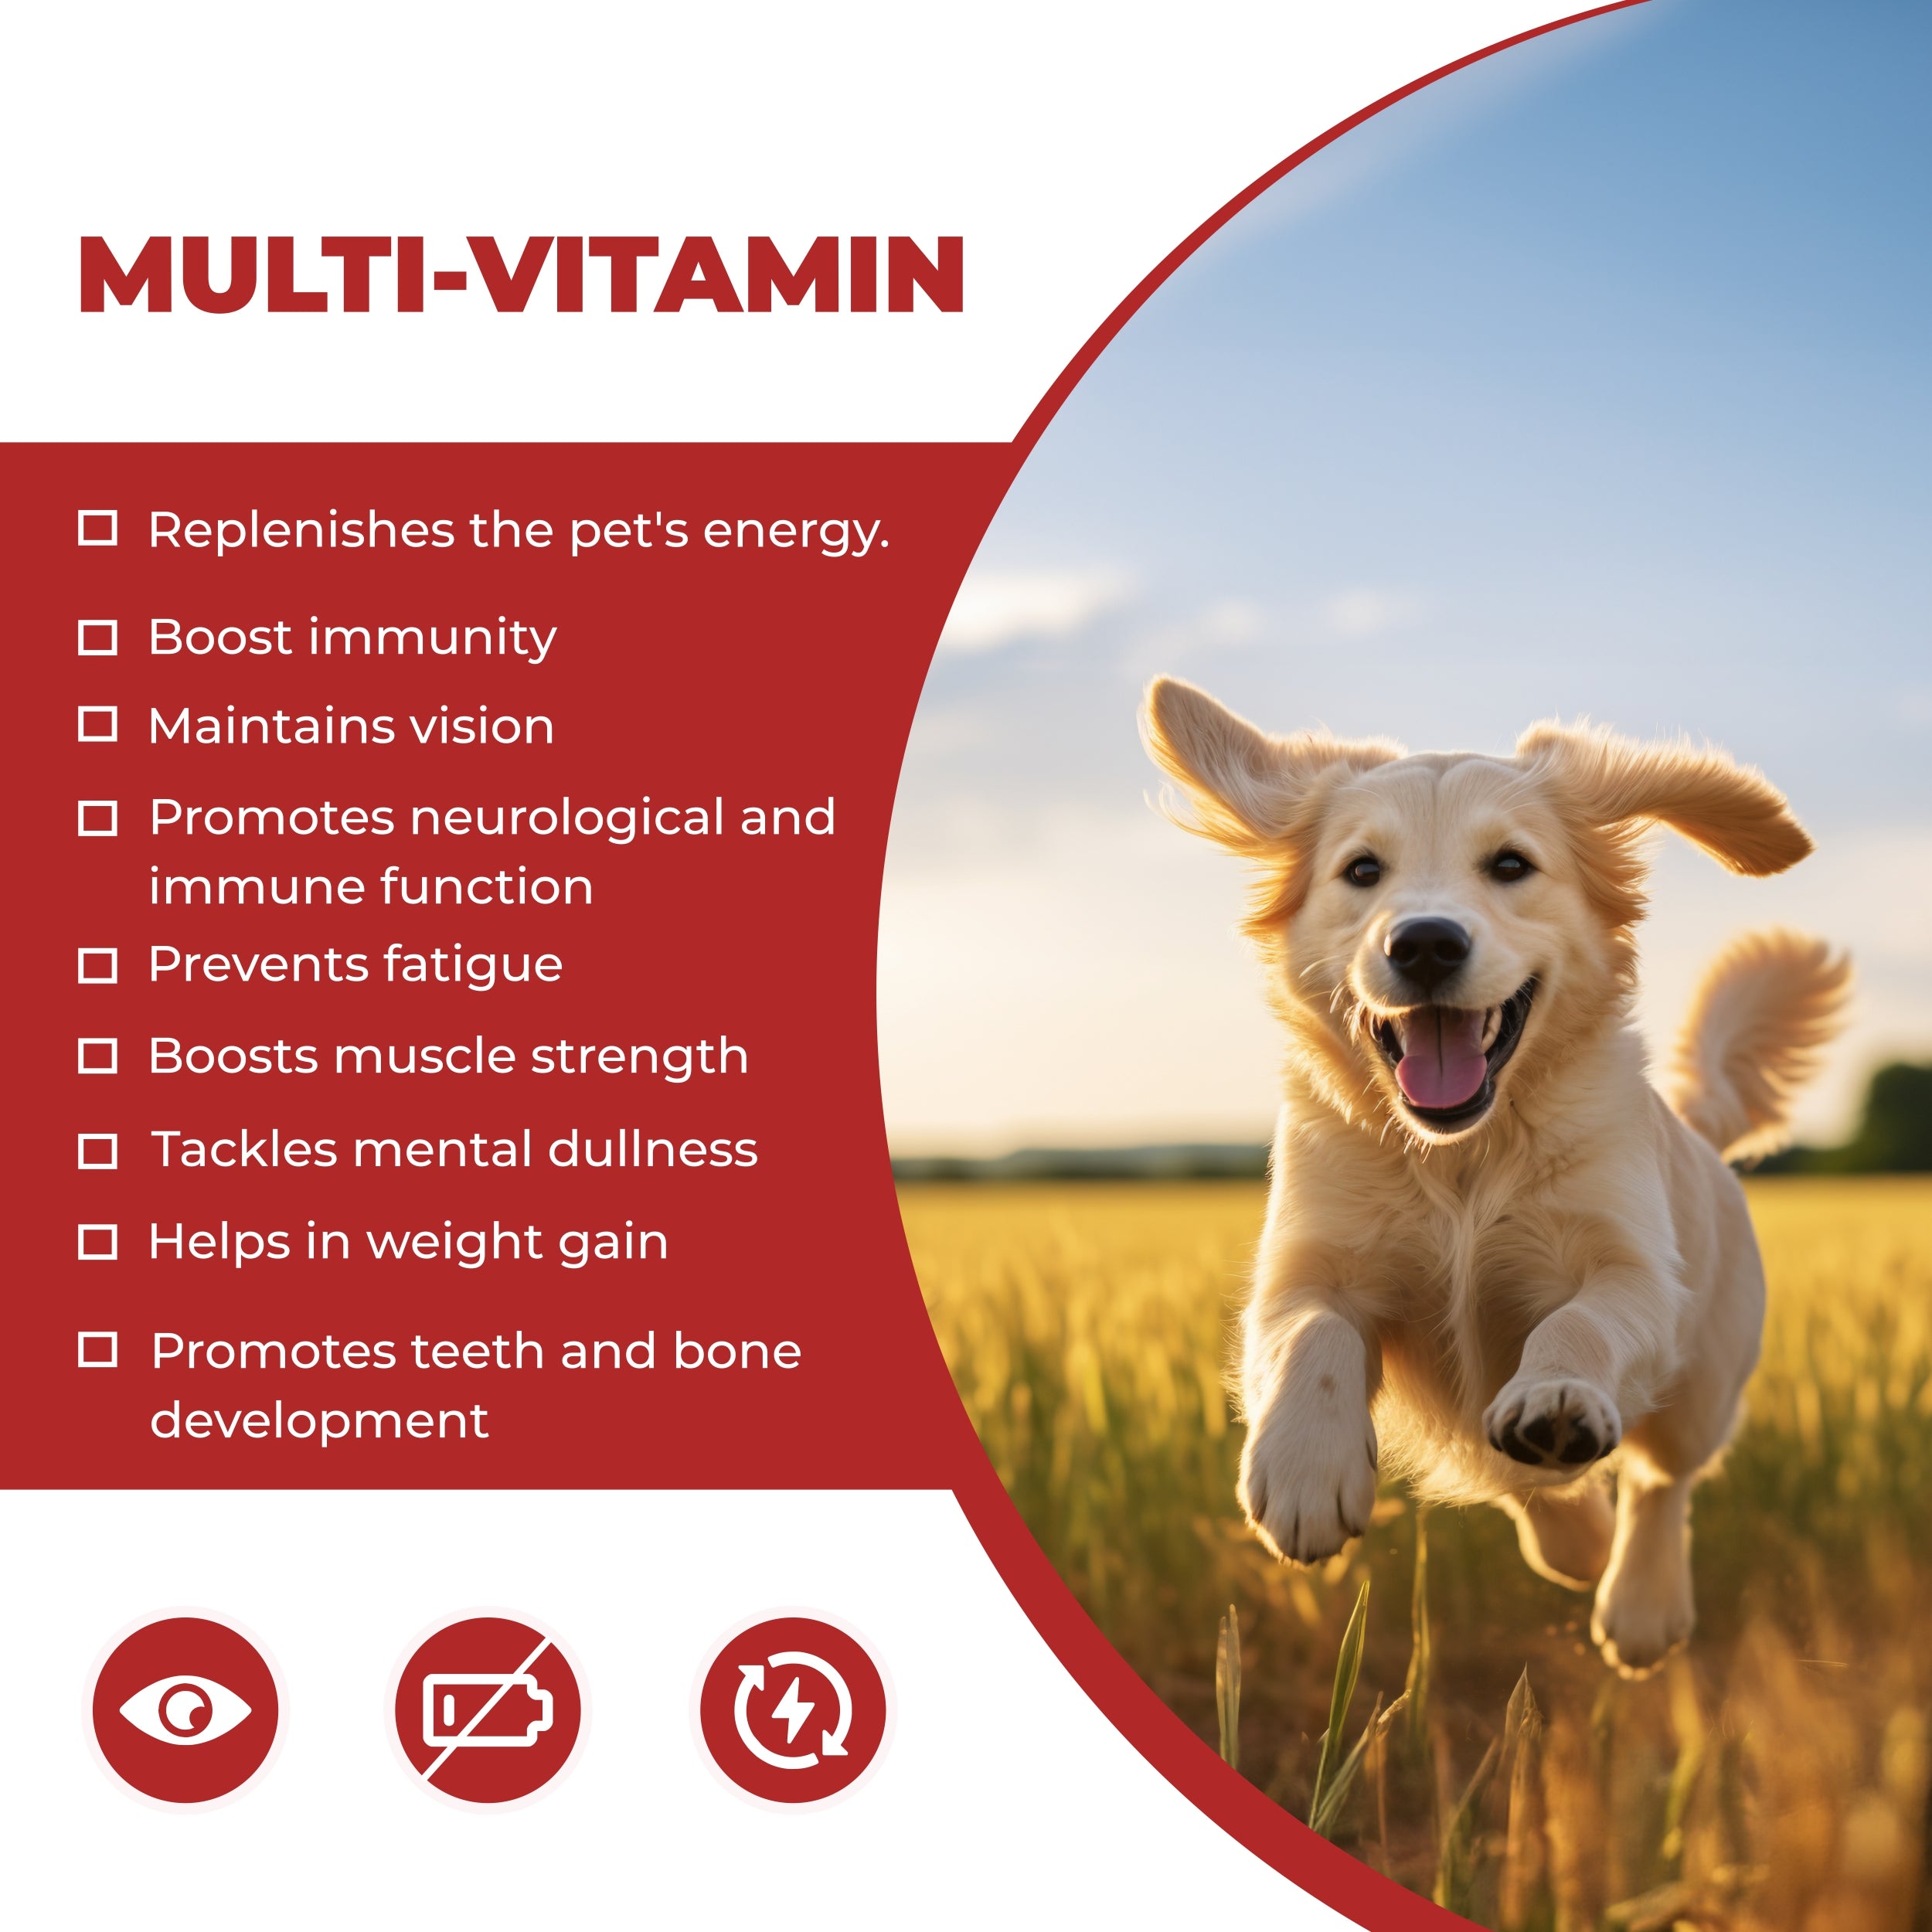 Canine vitamin supplement